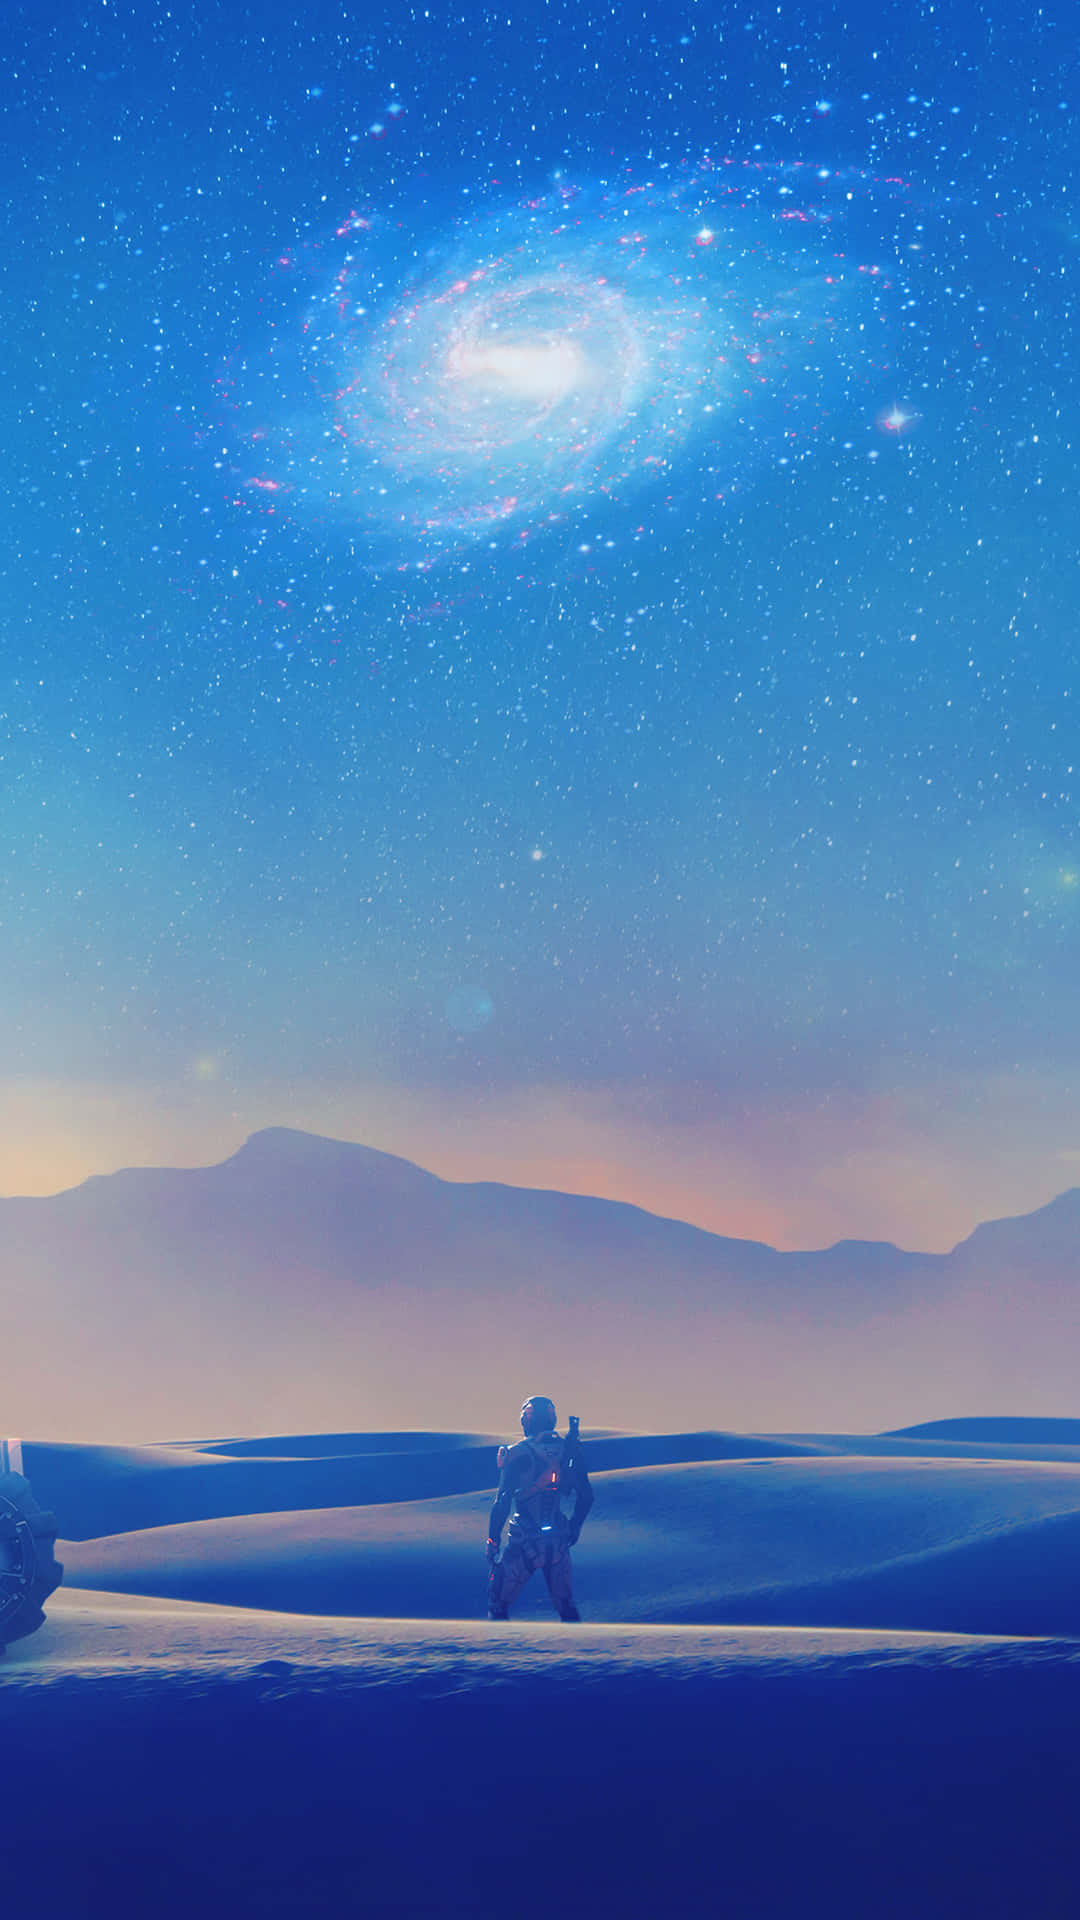 Mass Effect Andromeda's Mesmerizing Galaxy Wallpaper